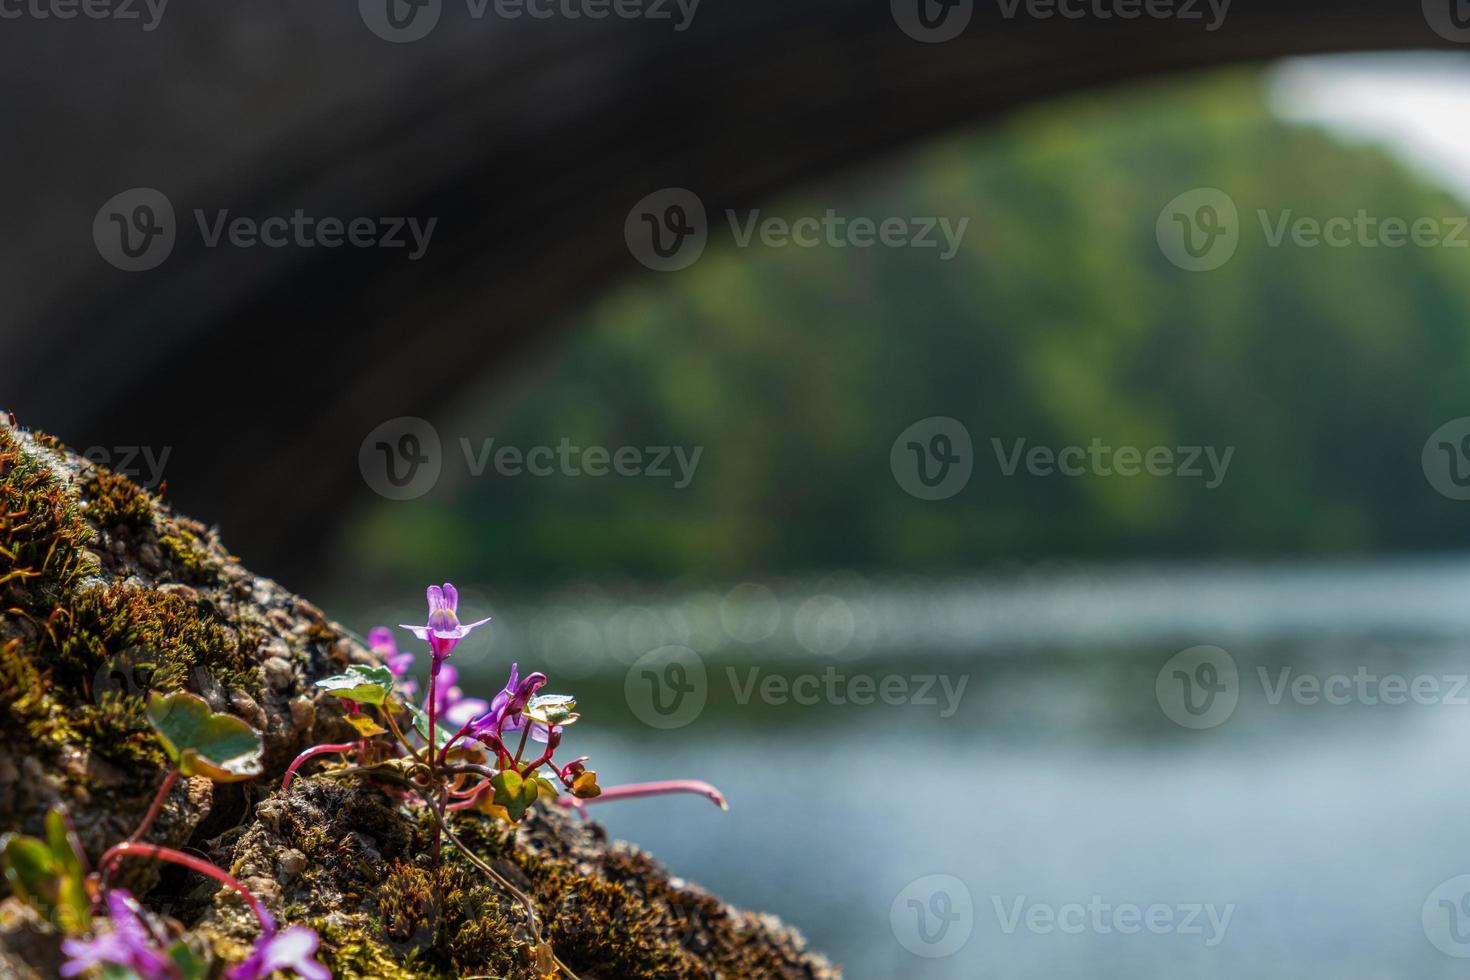 vild blomma på stranden av floden slitage i durham, england. foto